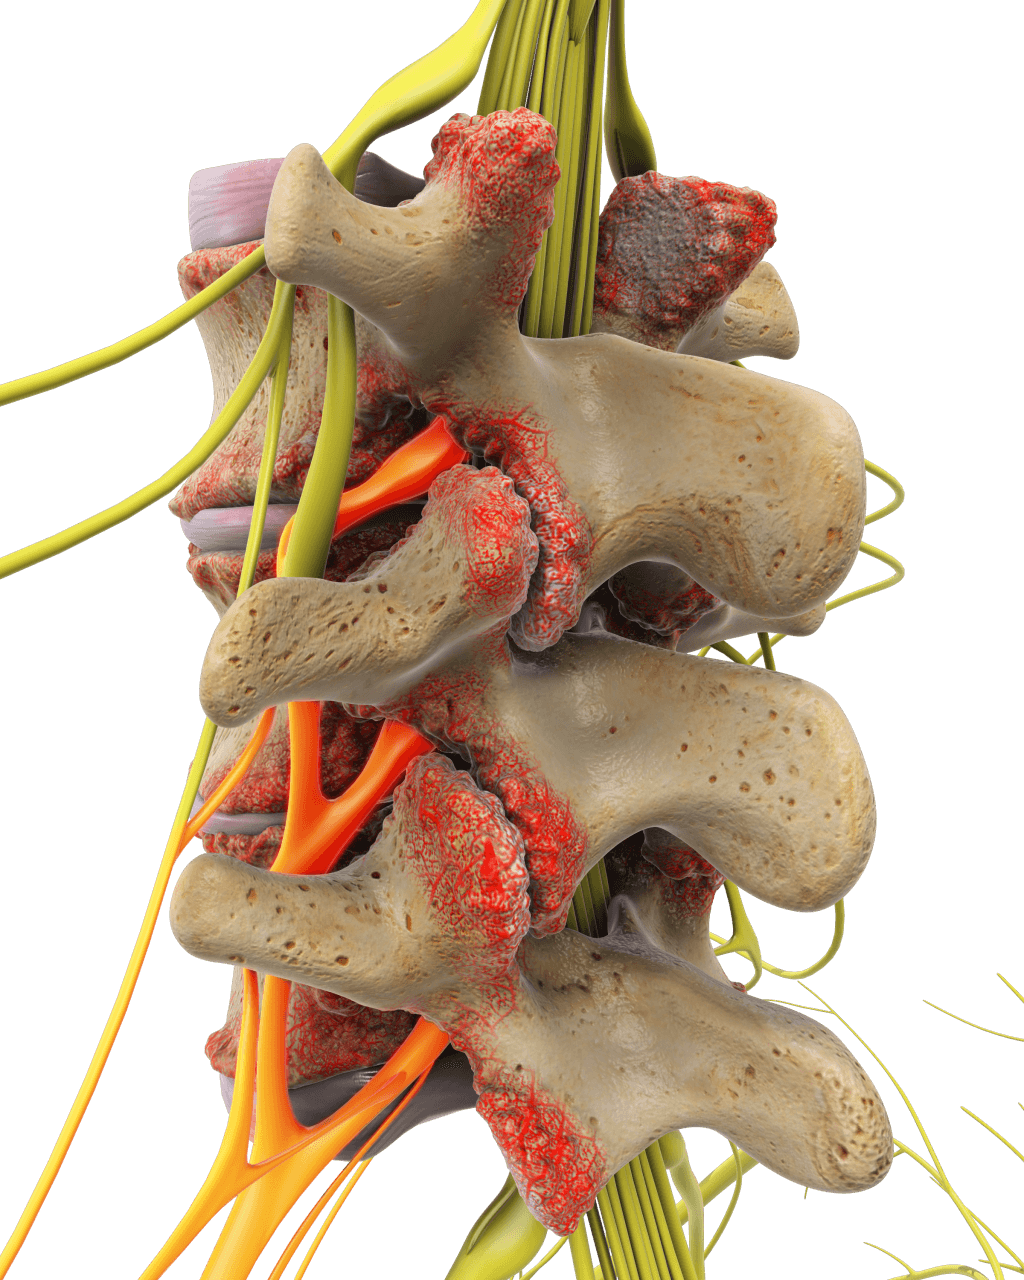 Spine model depicting facet joint syndrome